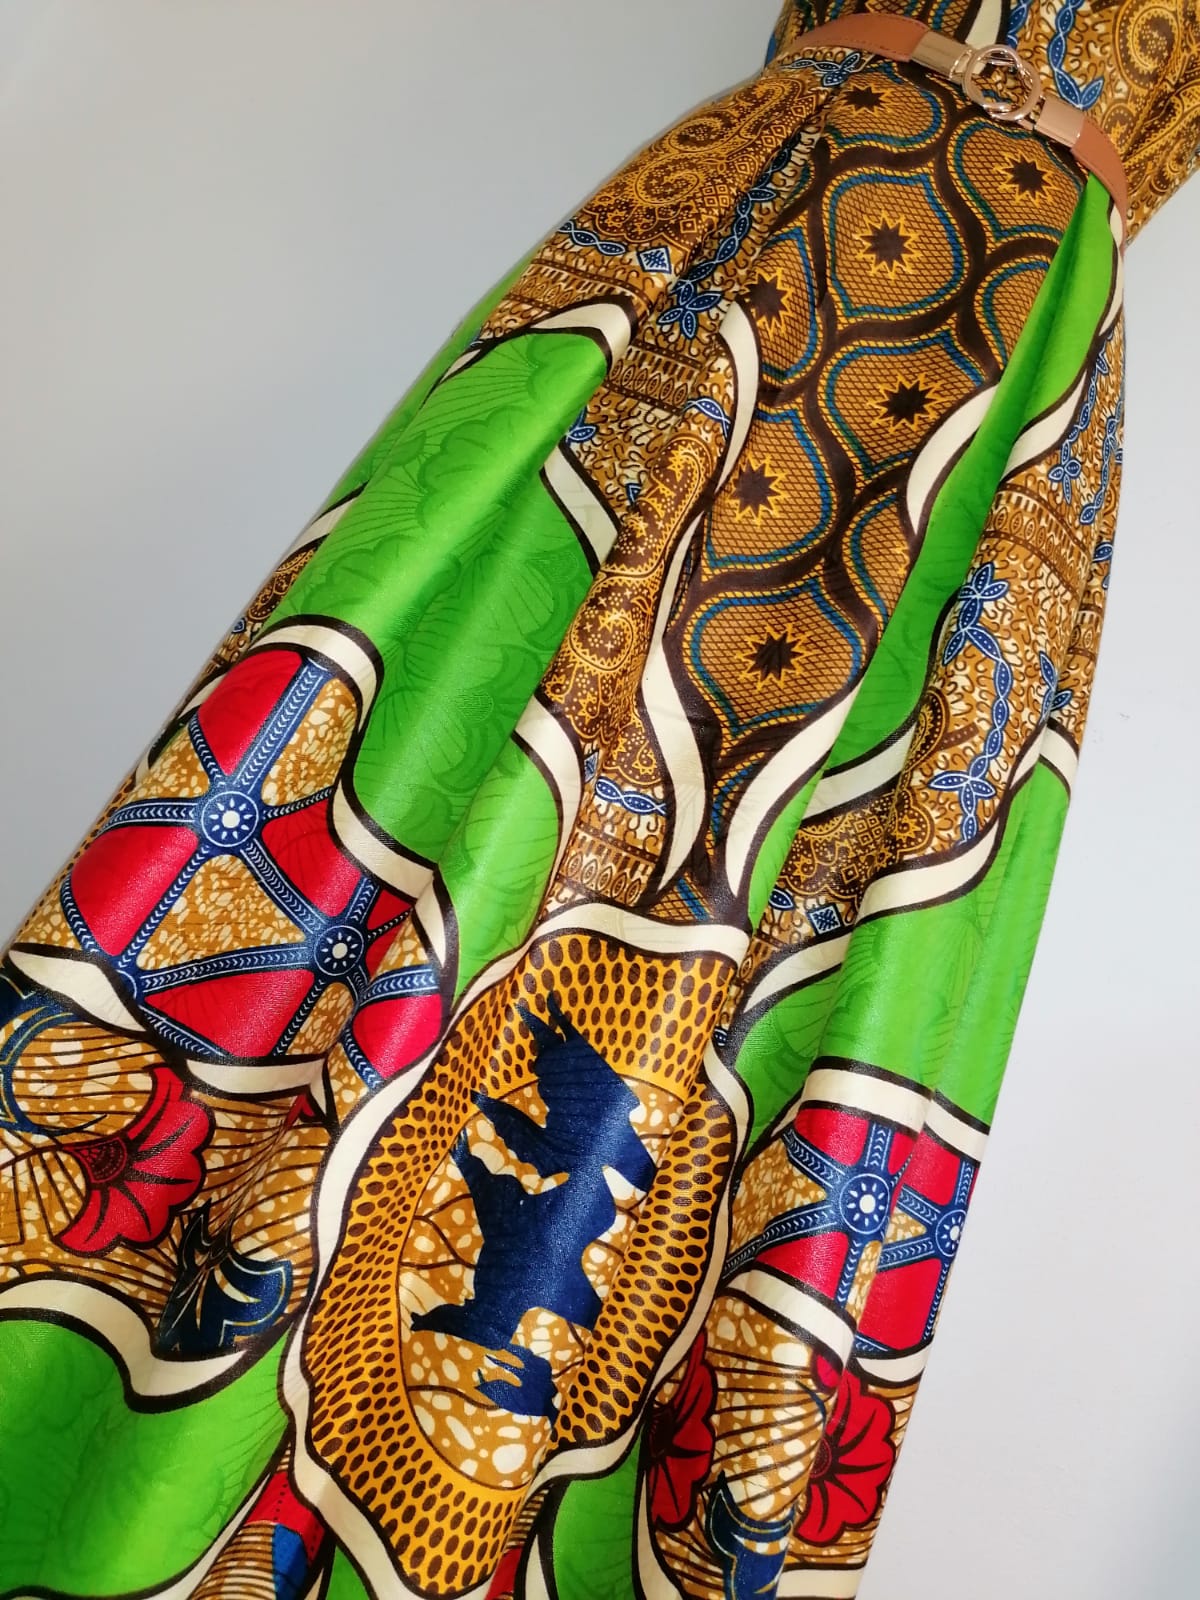 Zeleno zlaté šaty z afrického brokatu / Green dress from african fabric bazin